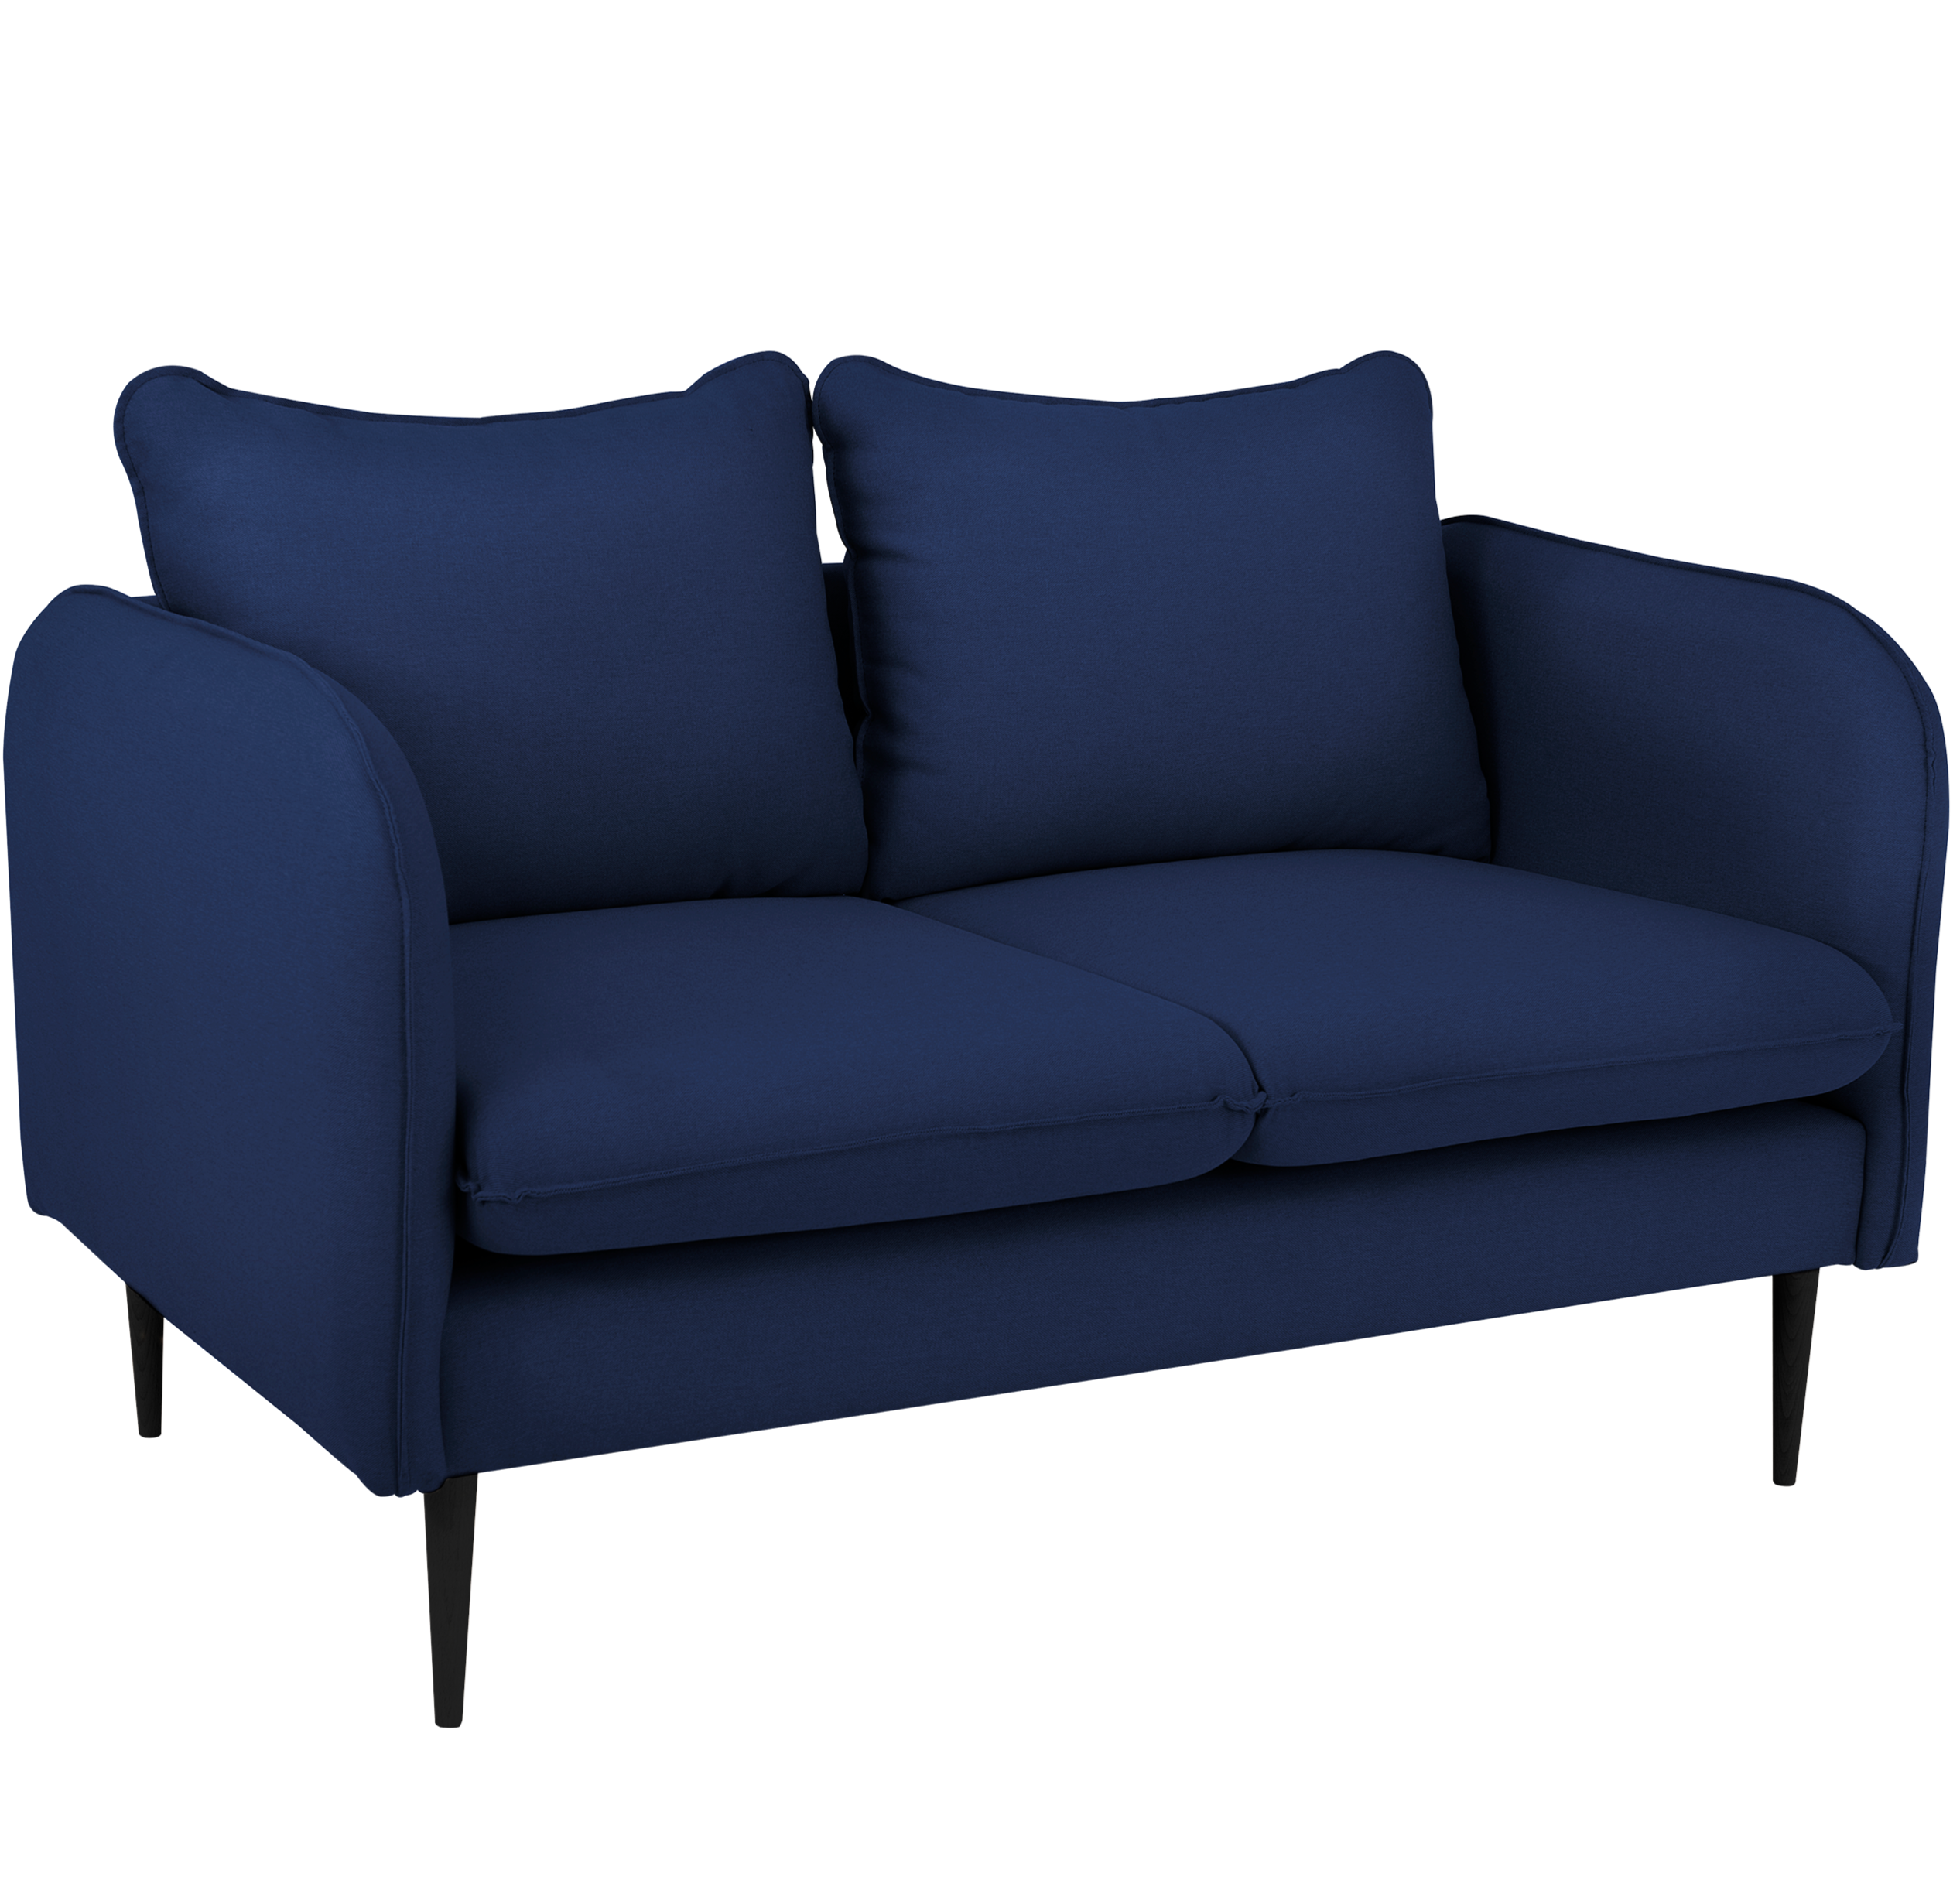 POSH BLACK Sofa 2 Seaters upholstery colour blue